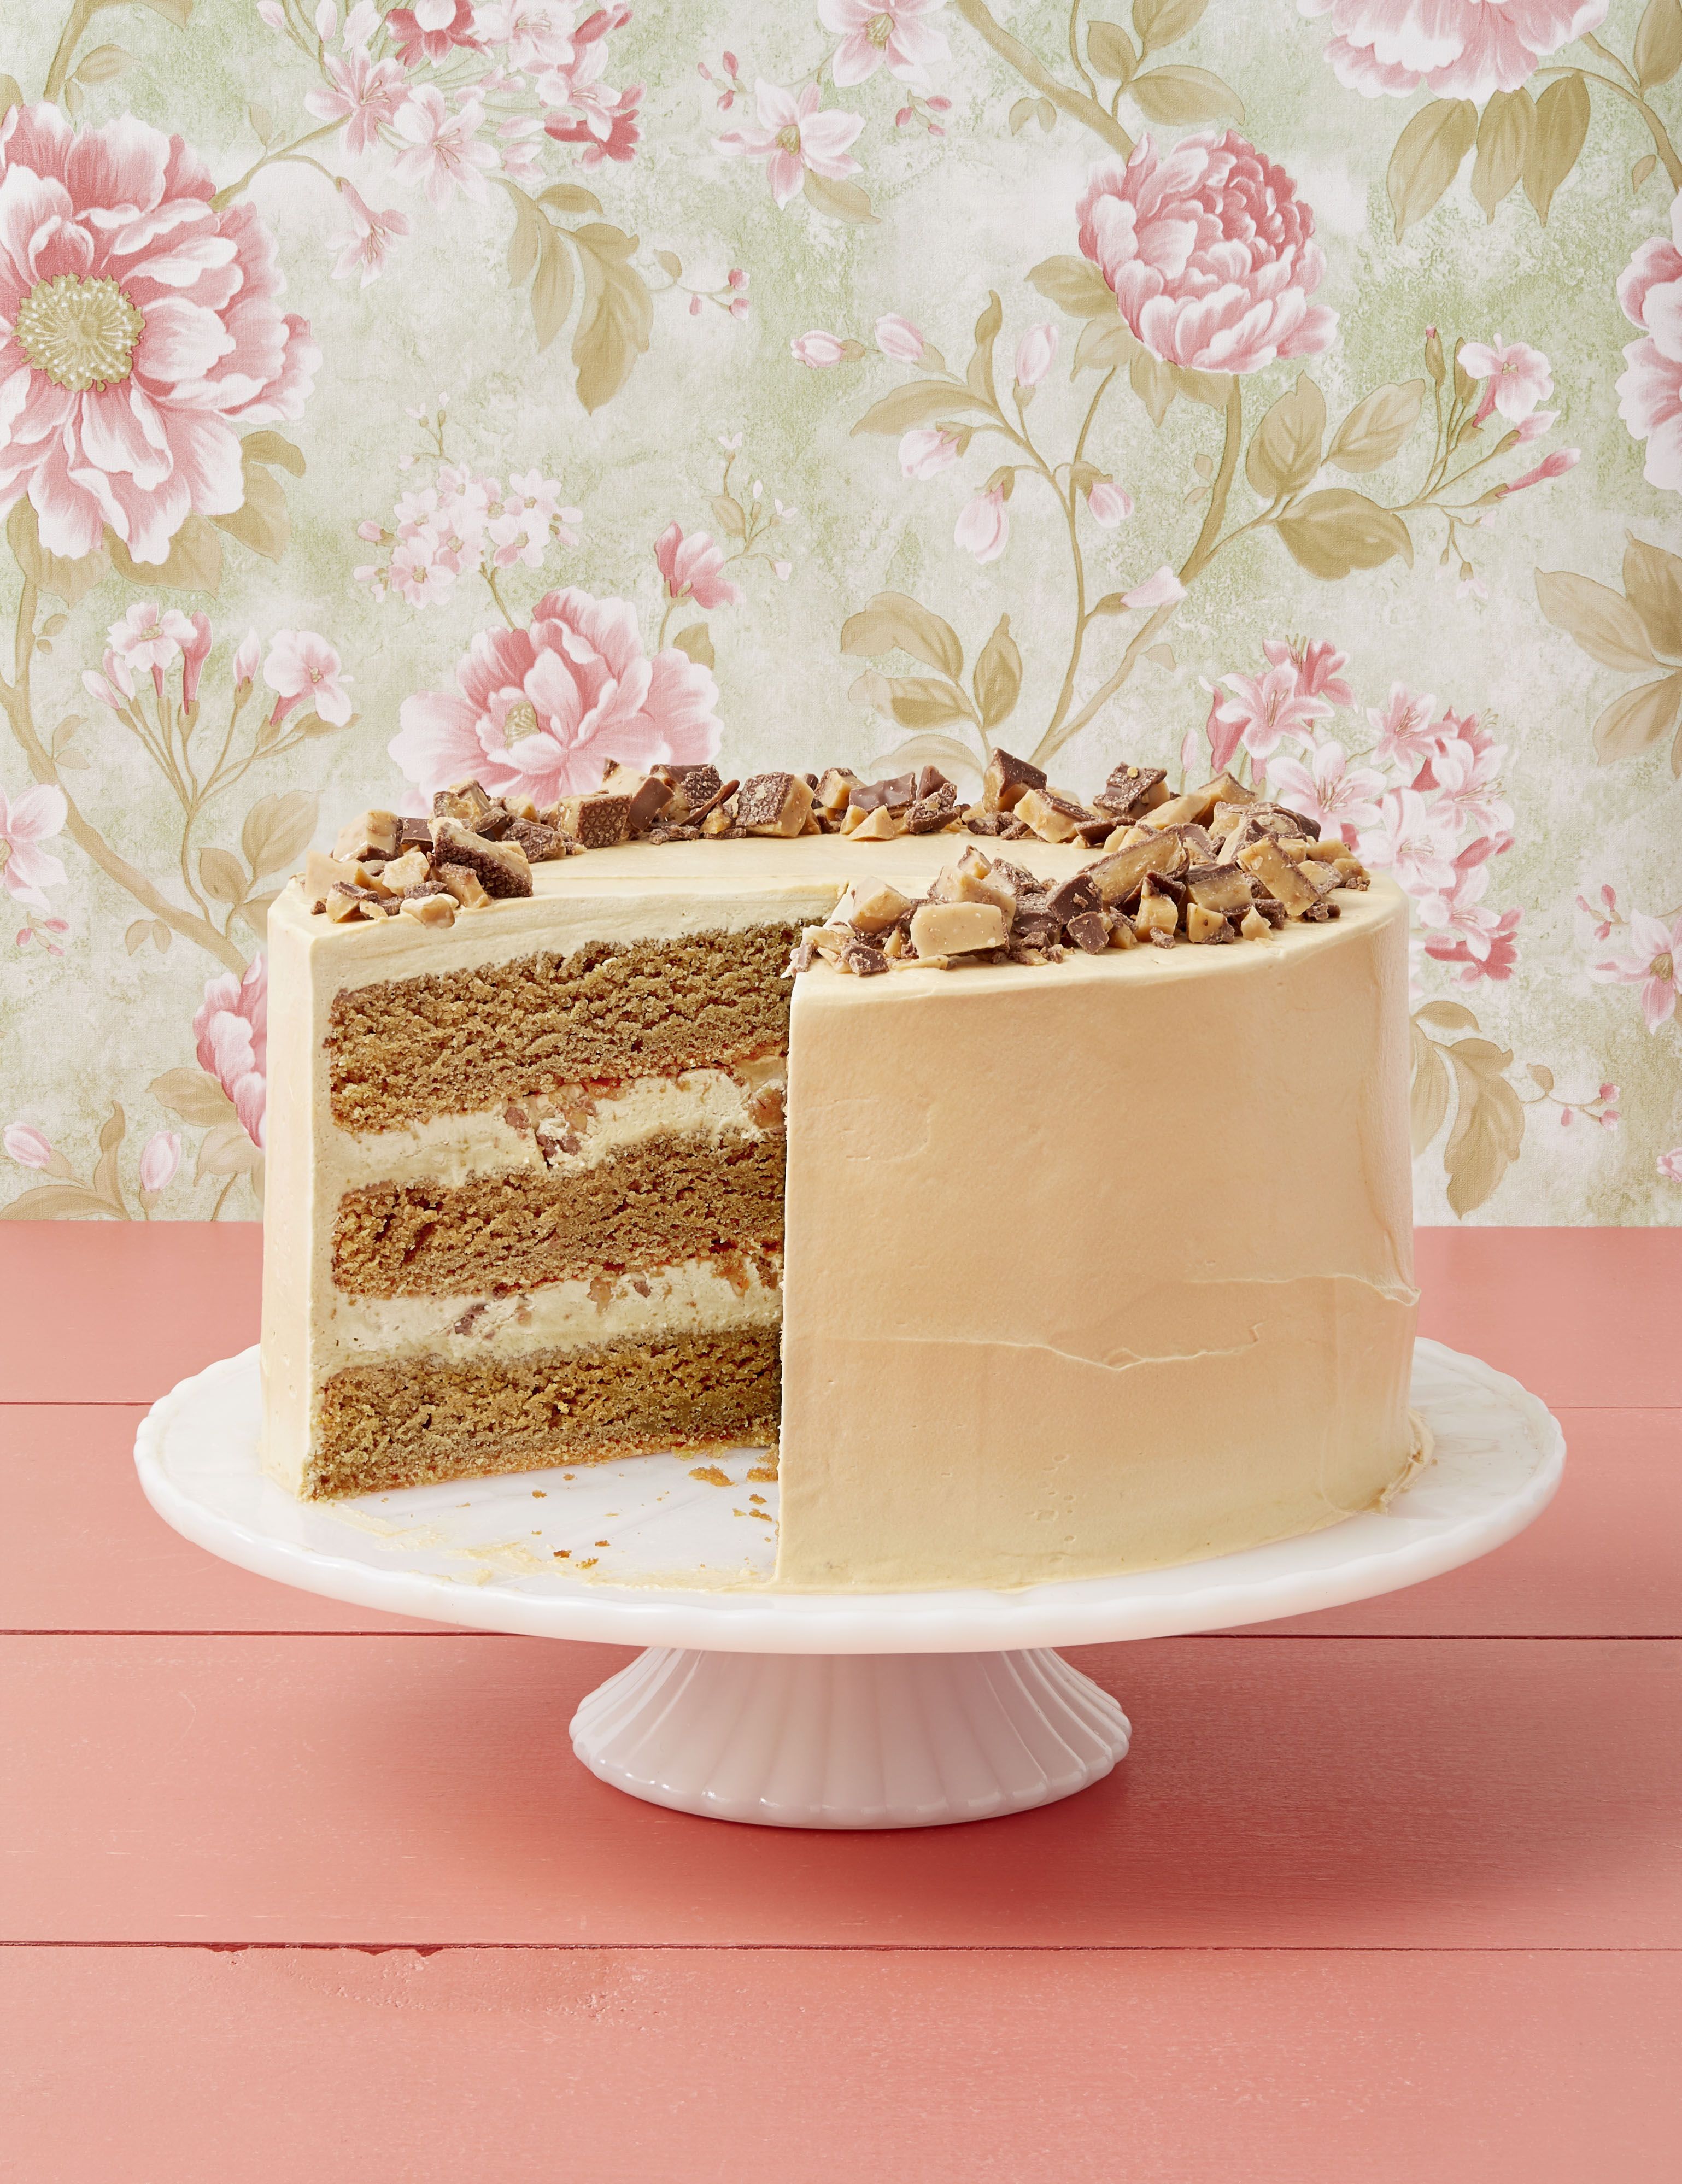 15 Best Birthday Cake Recipes - How to Make a Birthday Cake